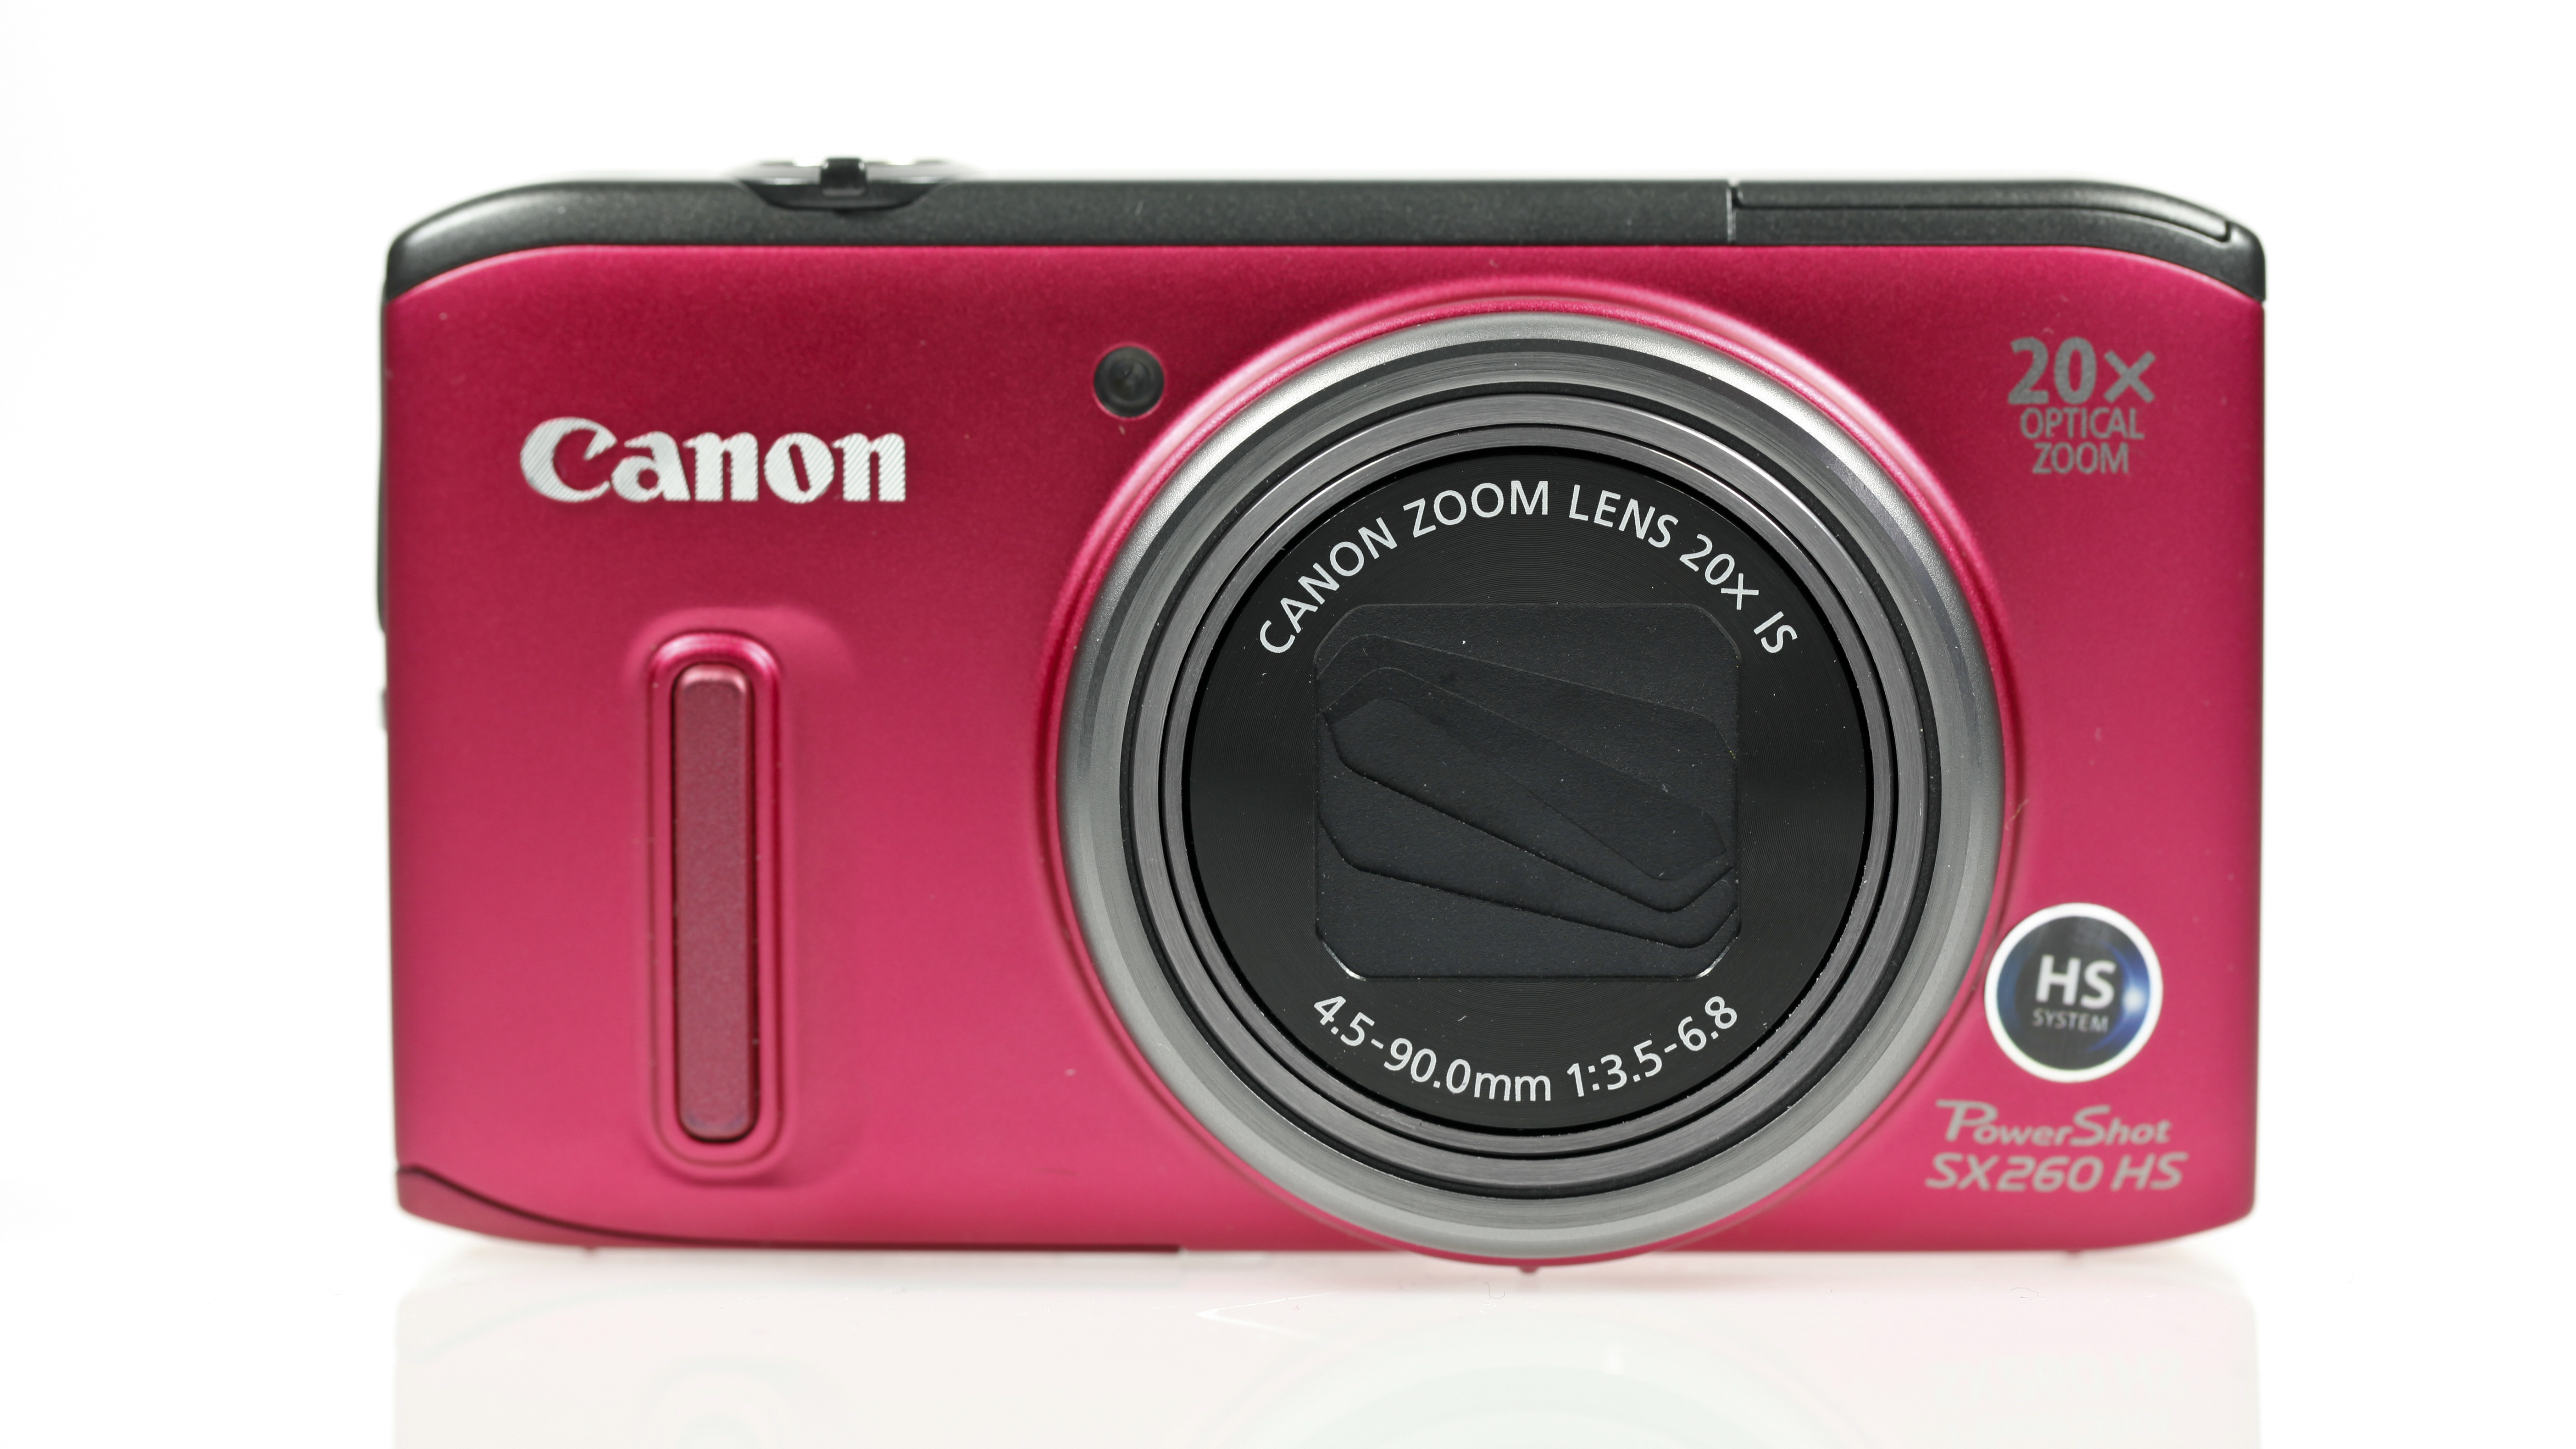 Canon PowerShot SX260 HS review | TechRadar